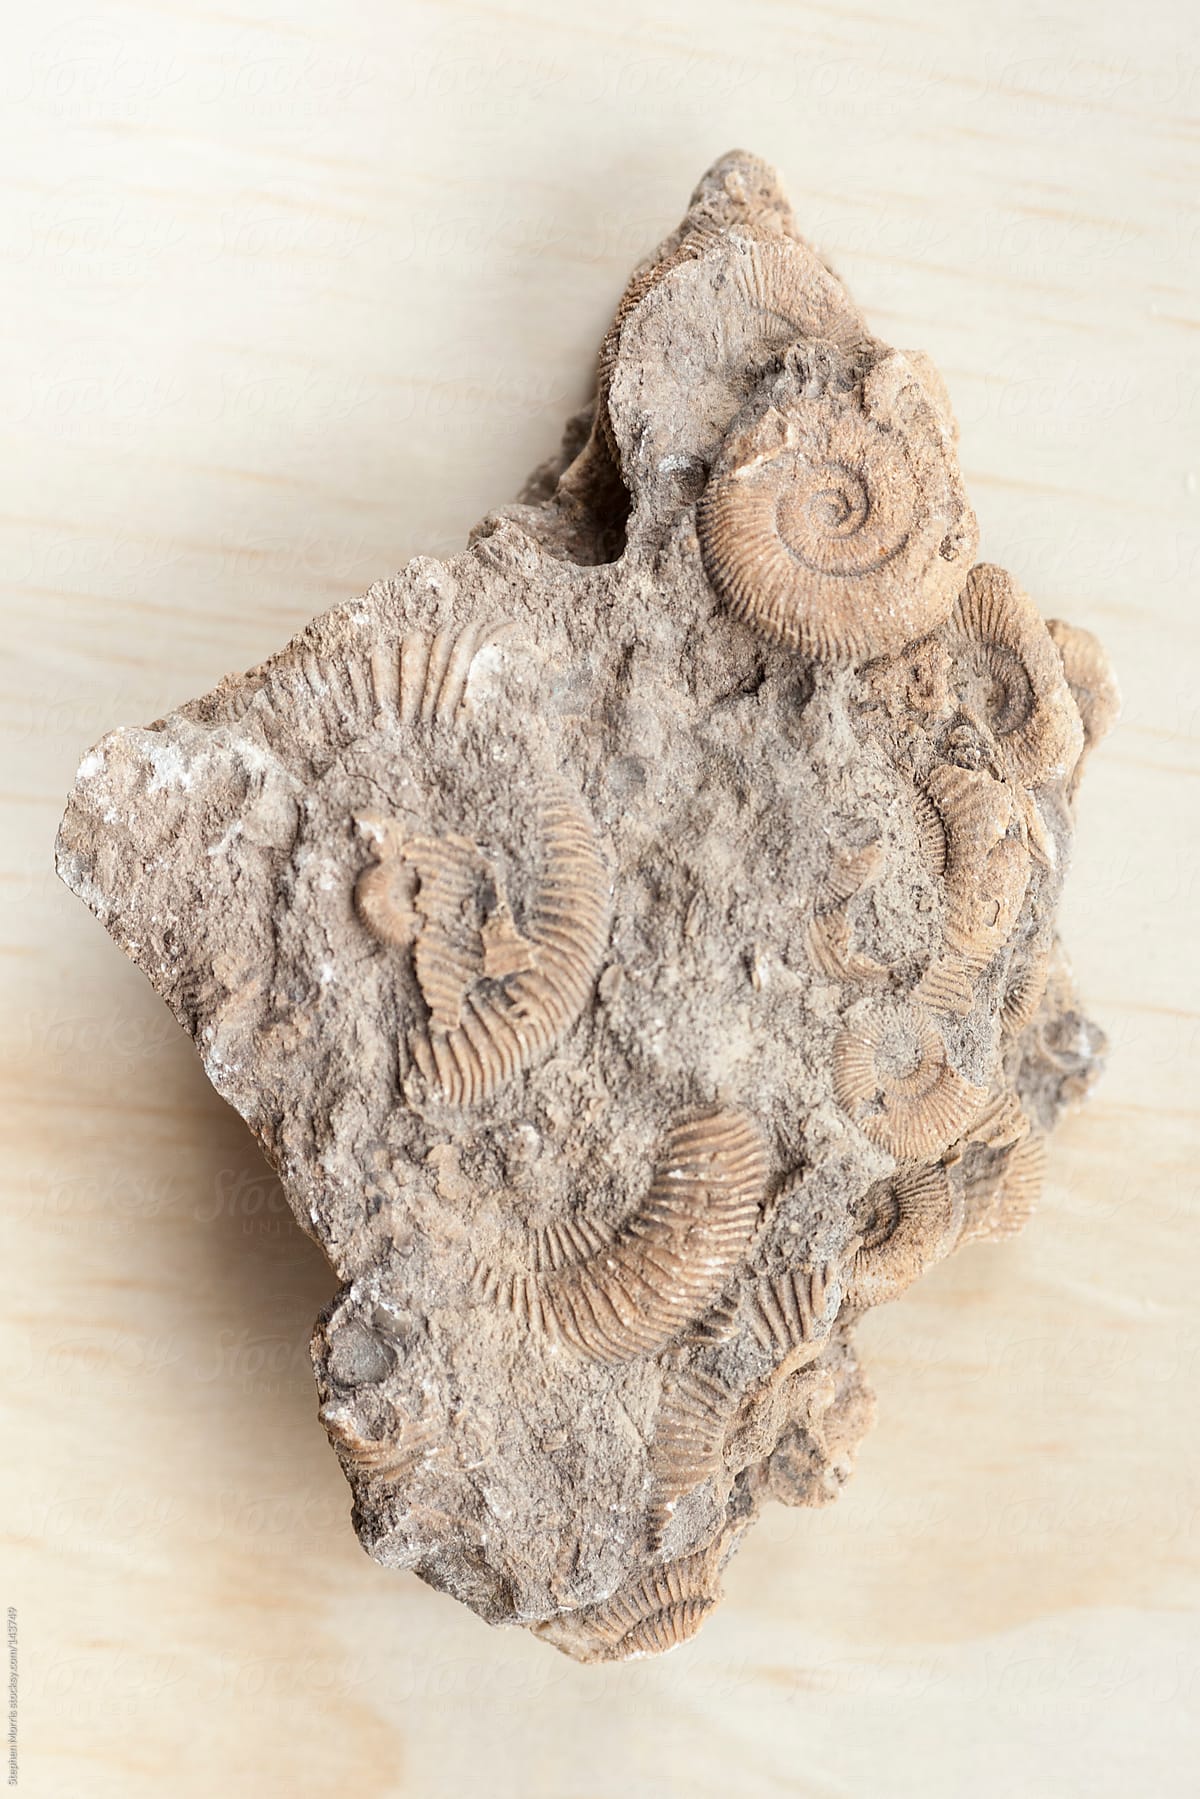 Fossilized Ammonite Nautilus Shells Porstephen Morris